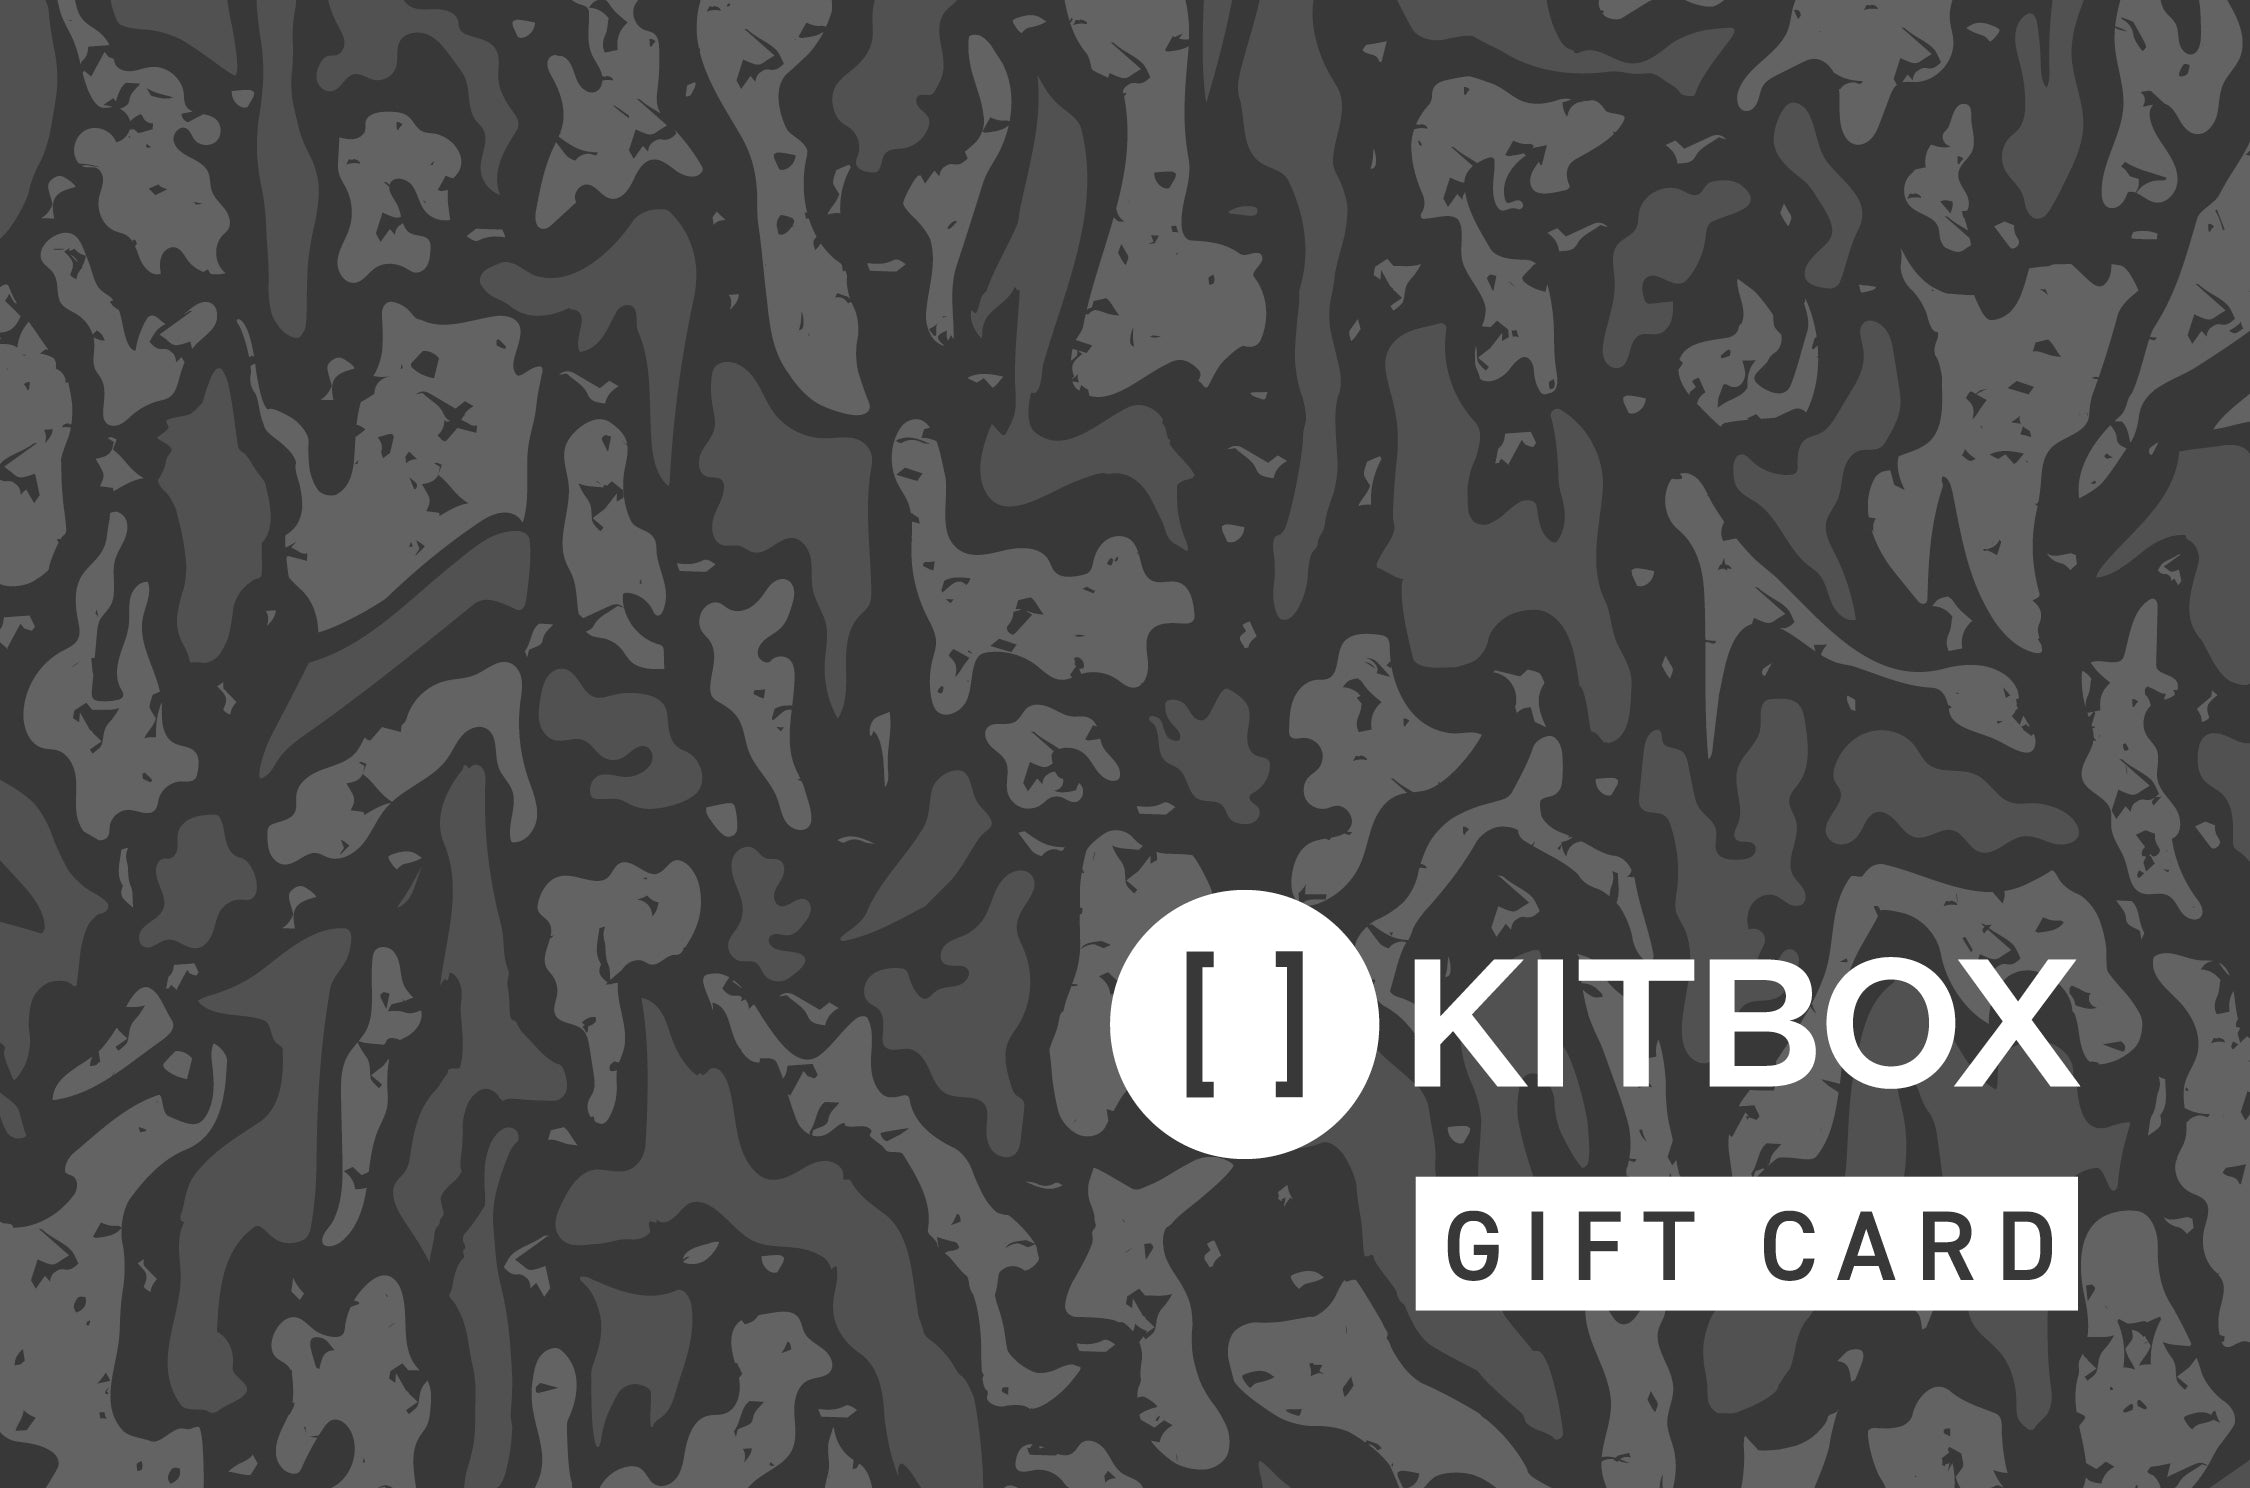 Kitbox Gift Cards